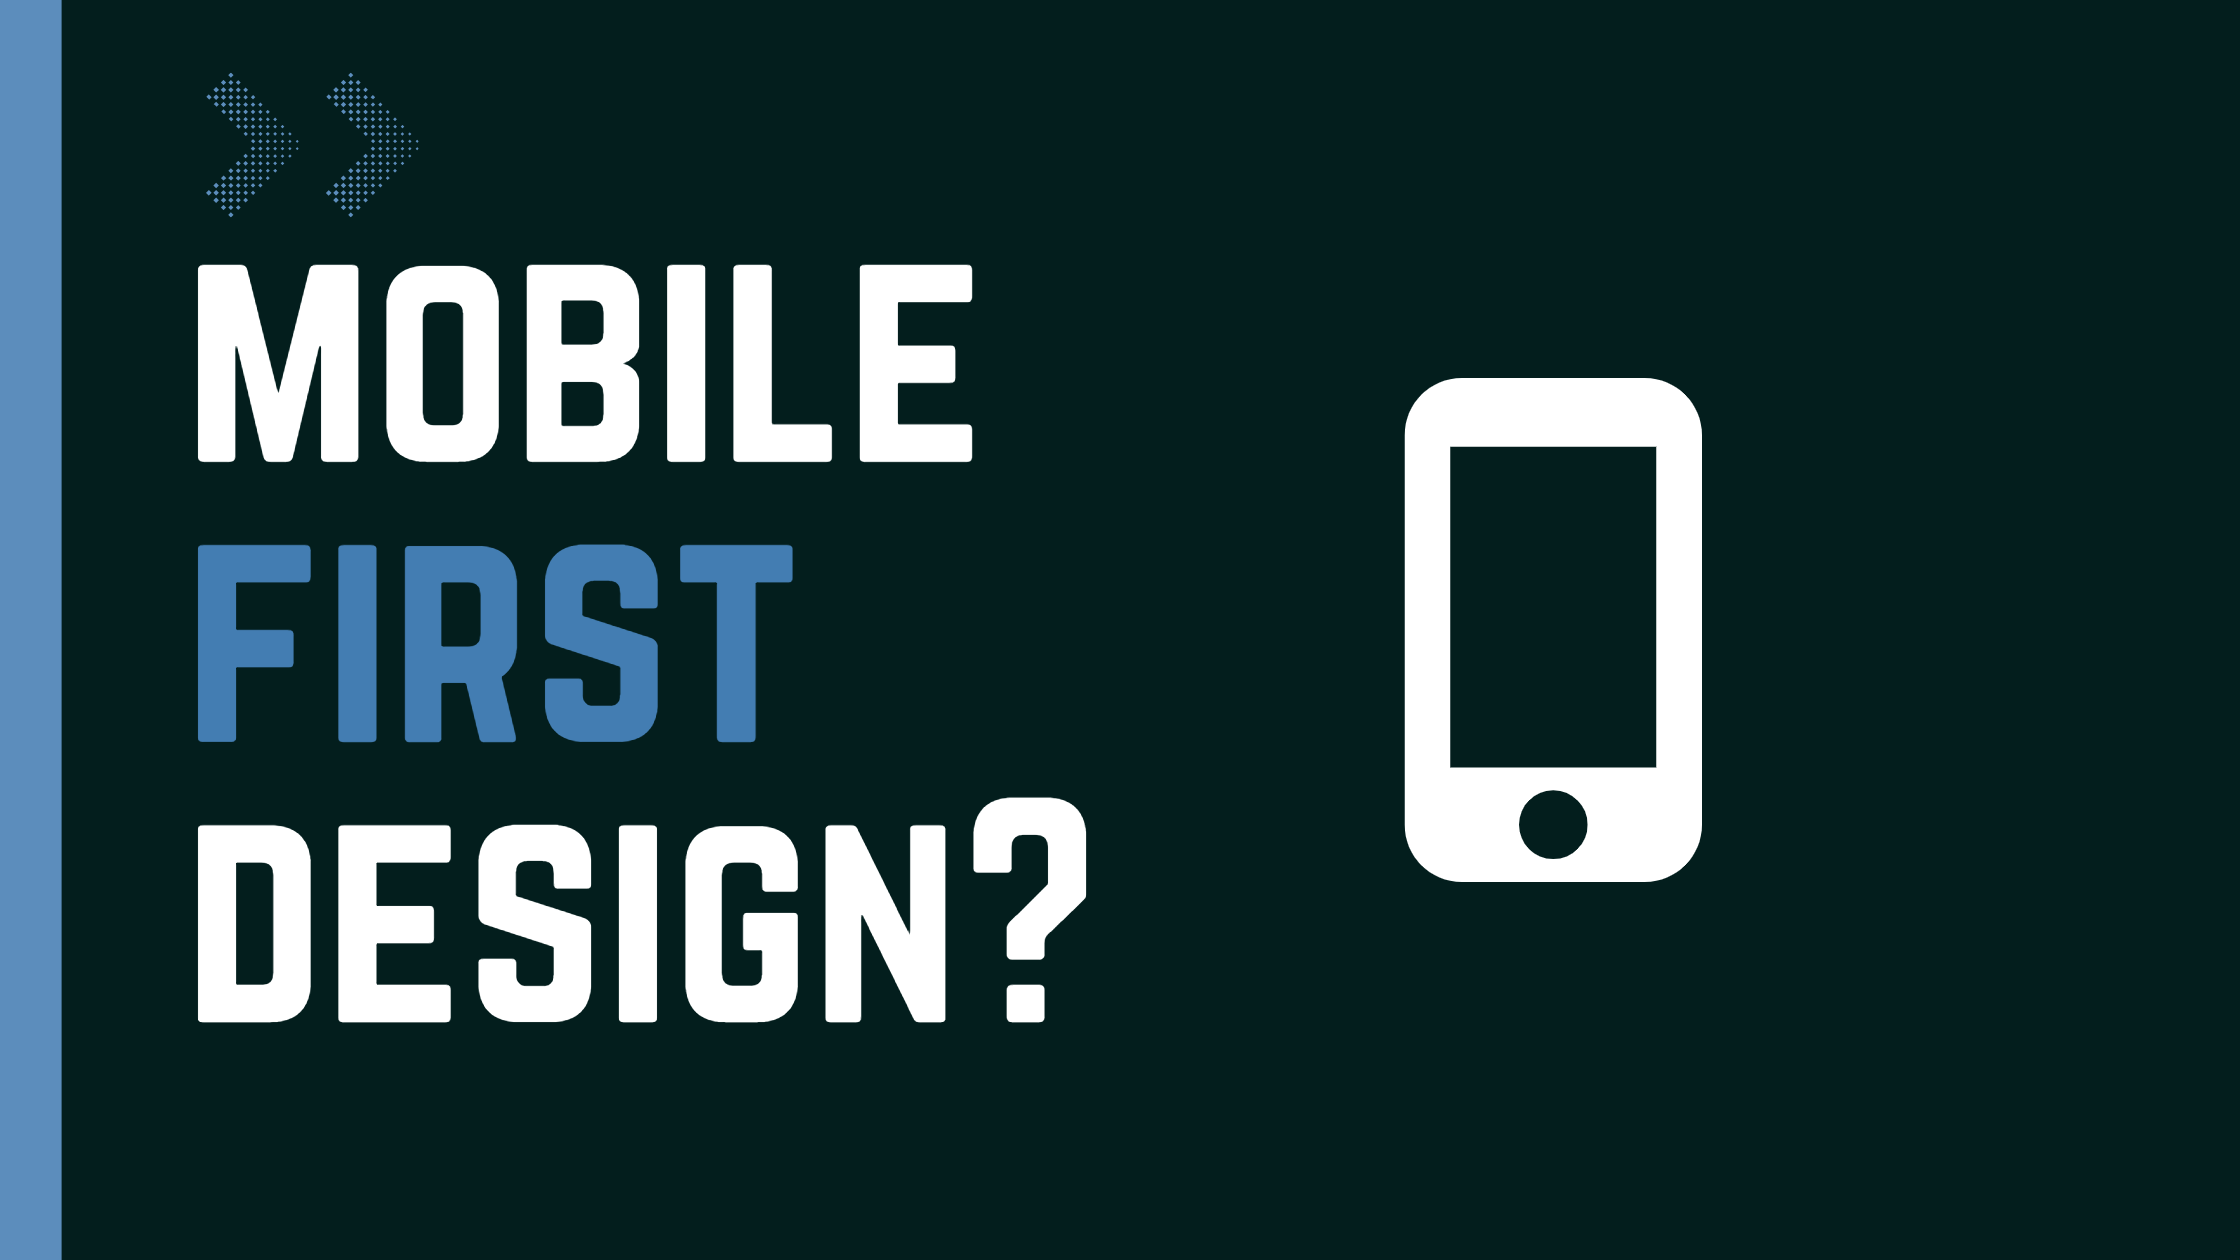 Should you follow mobile-first design principles?